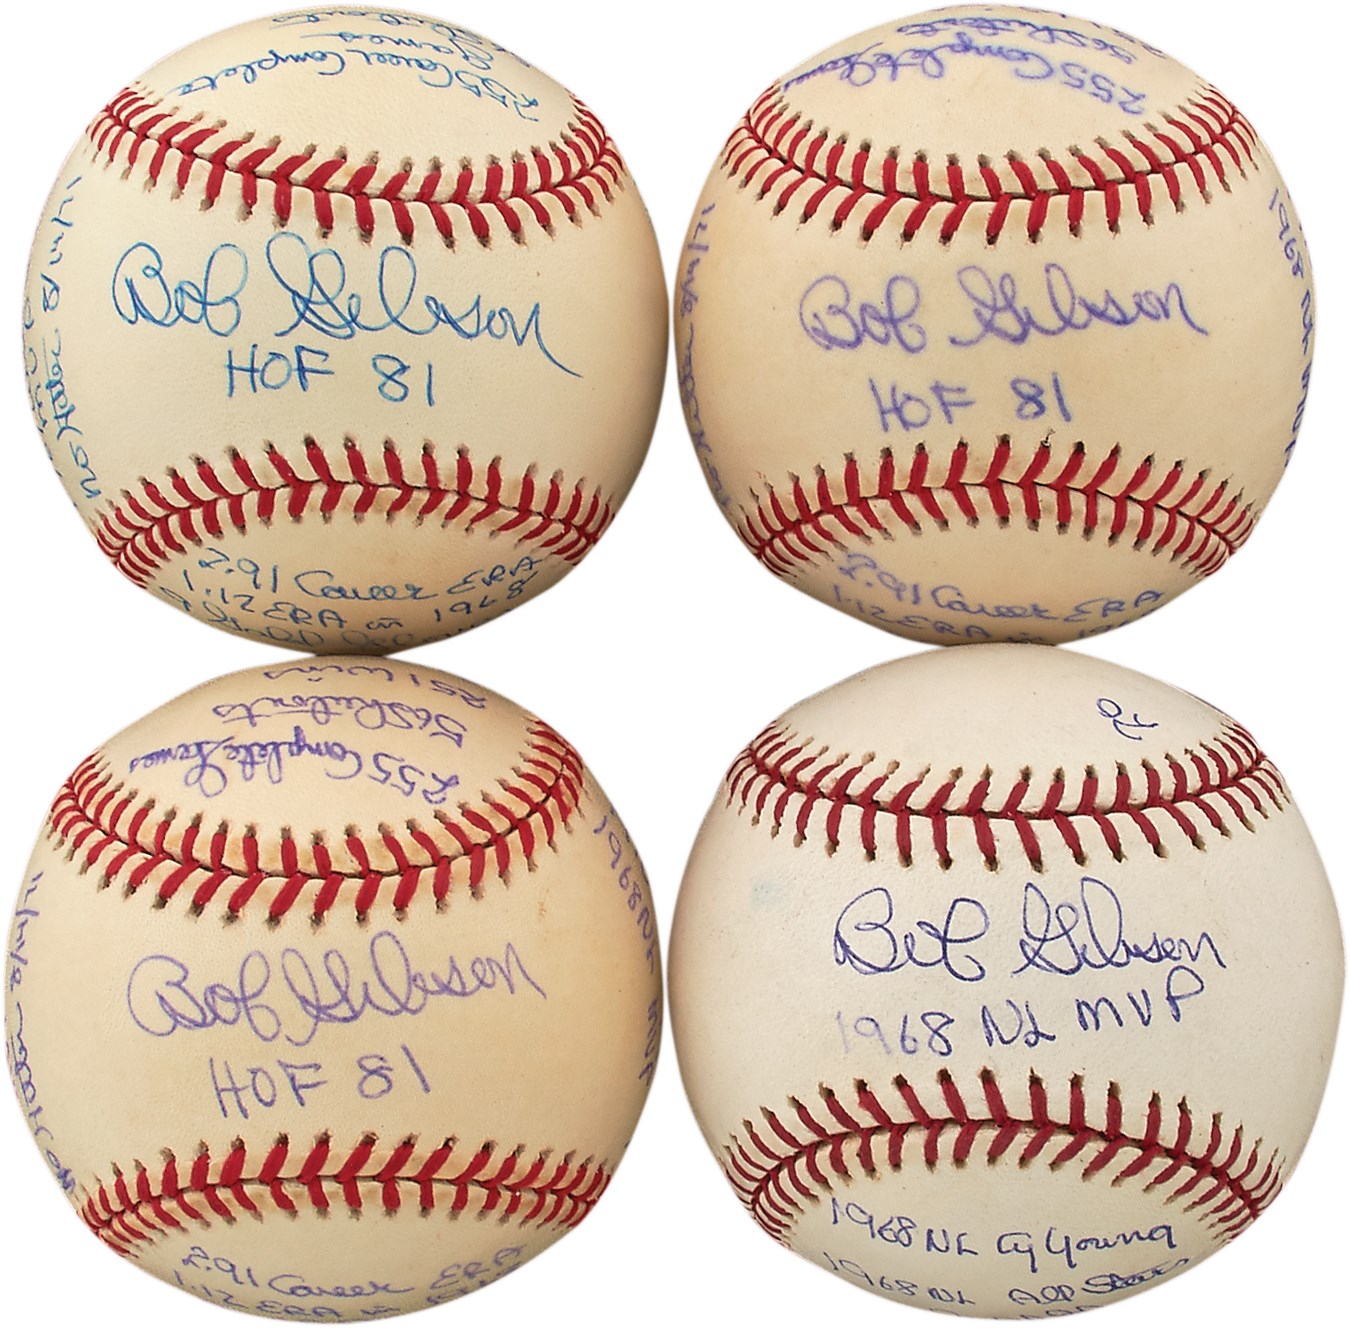 - Bob Gibson Signed Stat Baseballs (4)